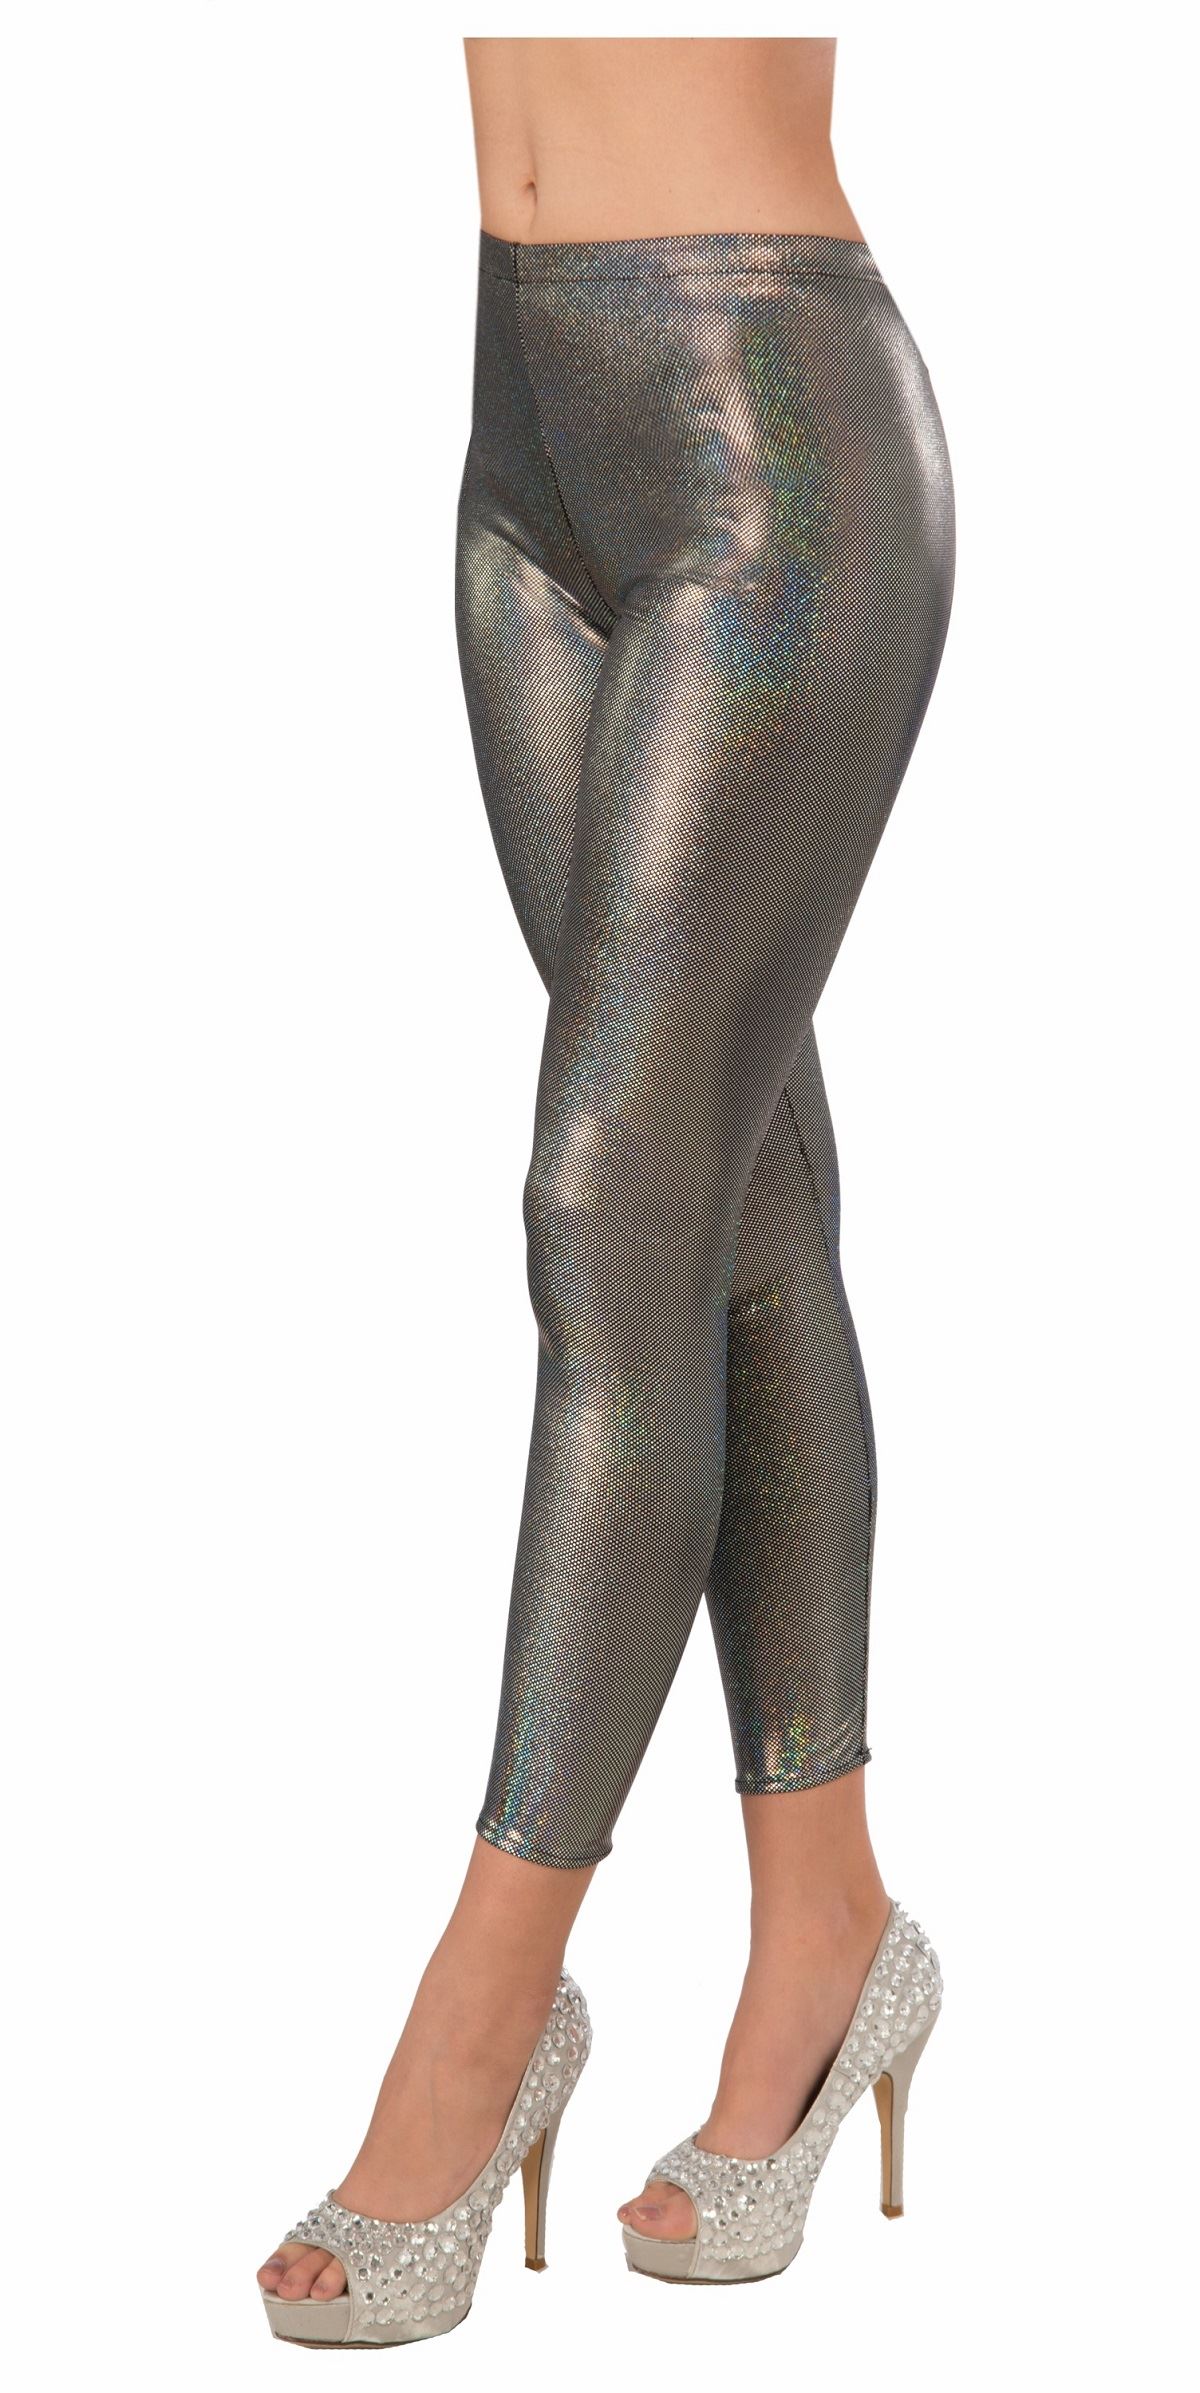 Adult Futuristic Silver Leggings, $15.99